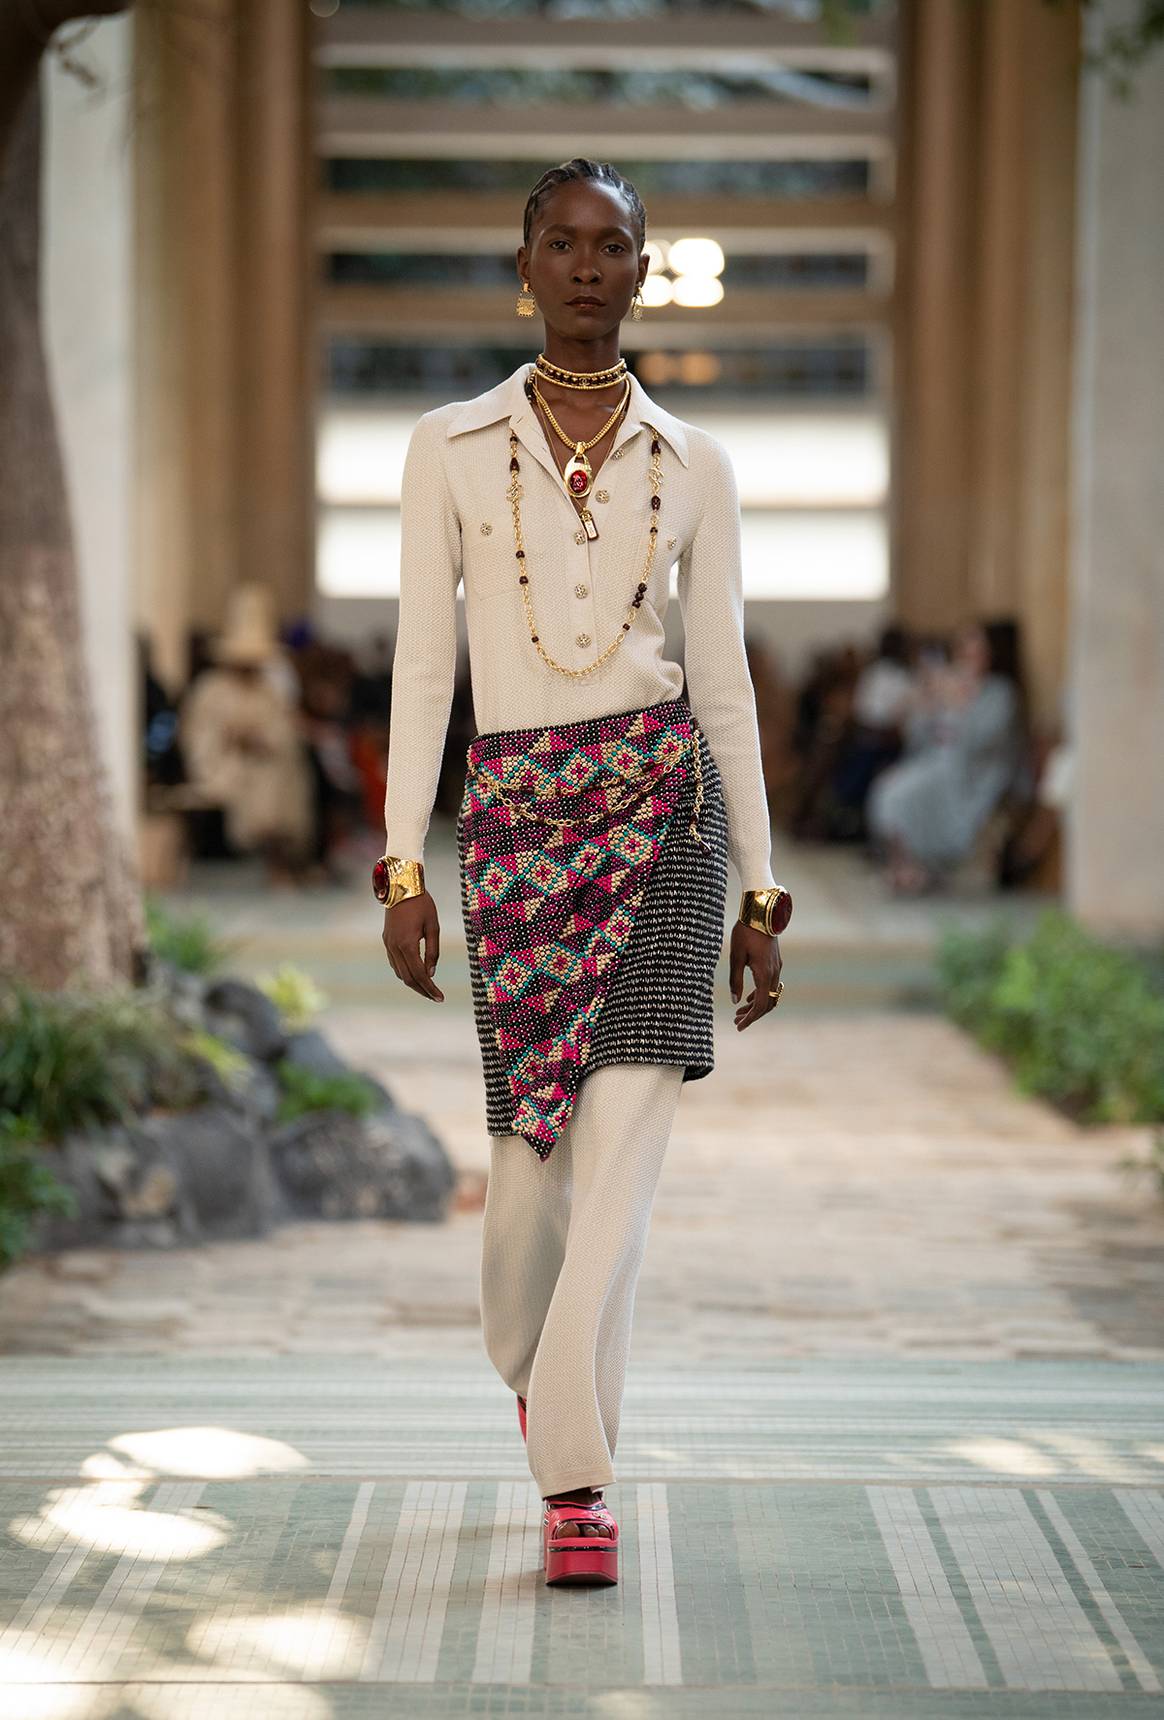 Photo Credits: Chanel, colección Dakar 2022/23 Métiers d’art collection. Fotografía de cortesía.